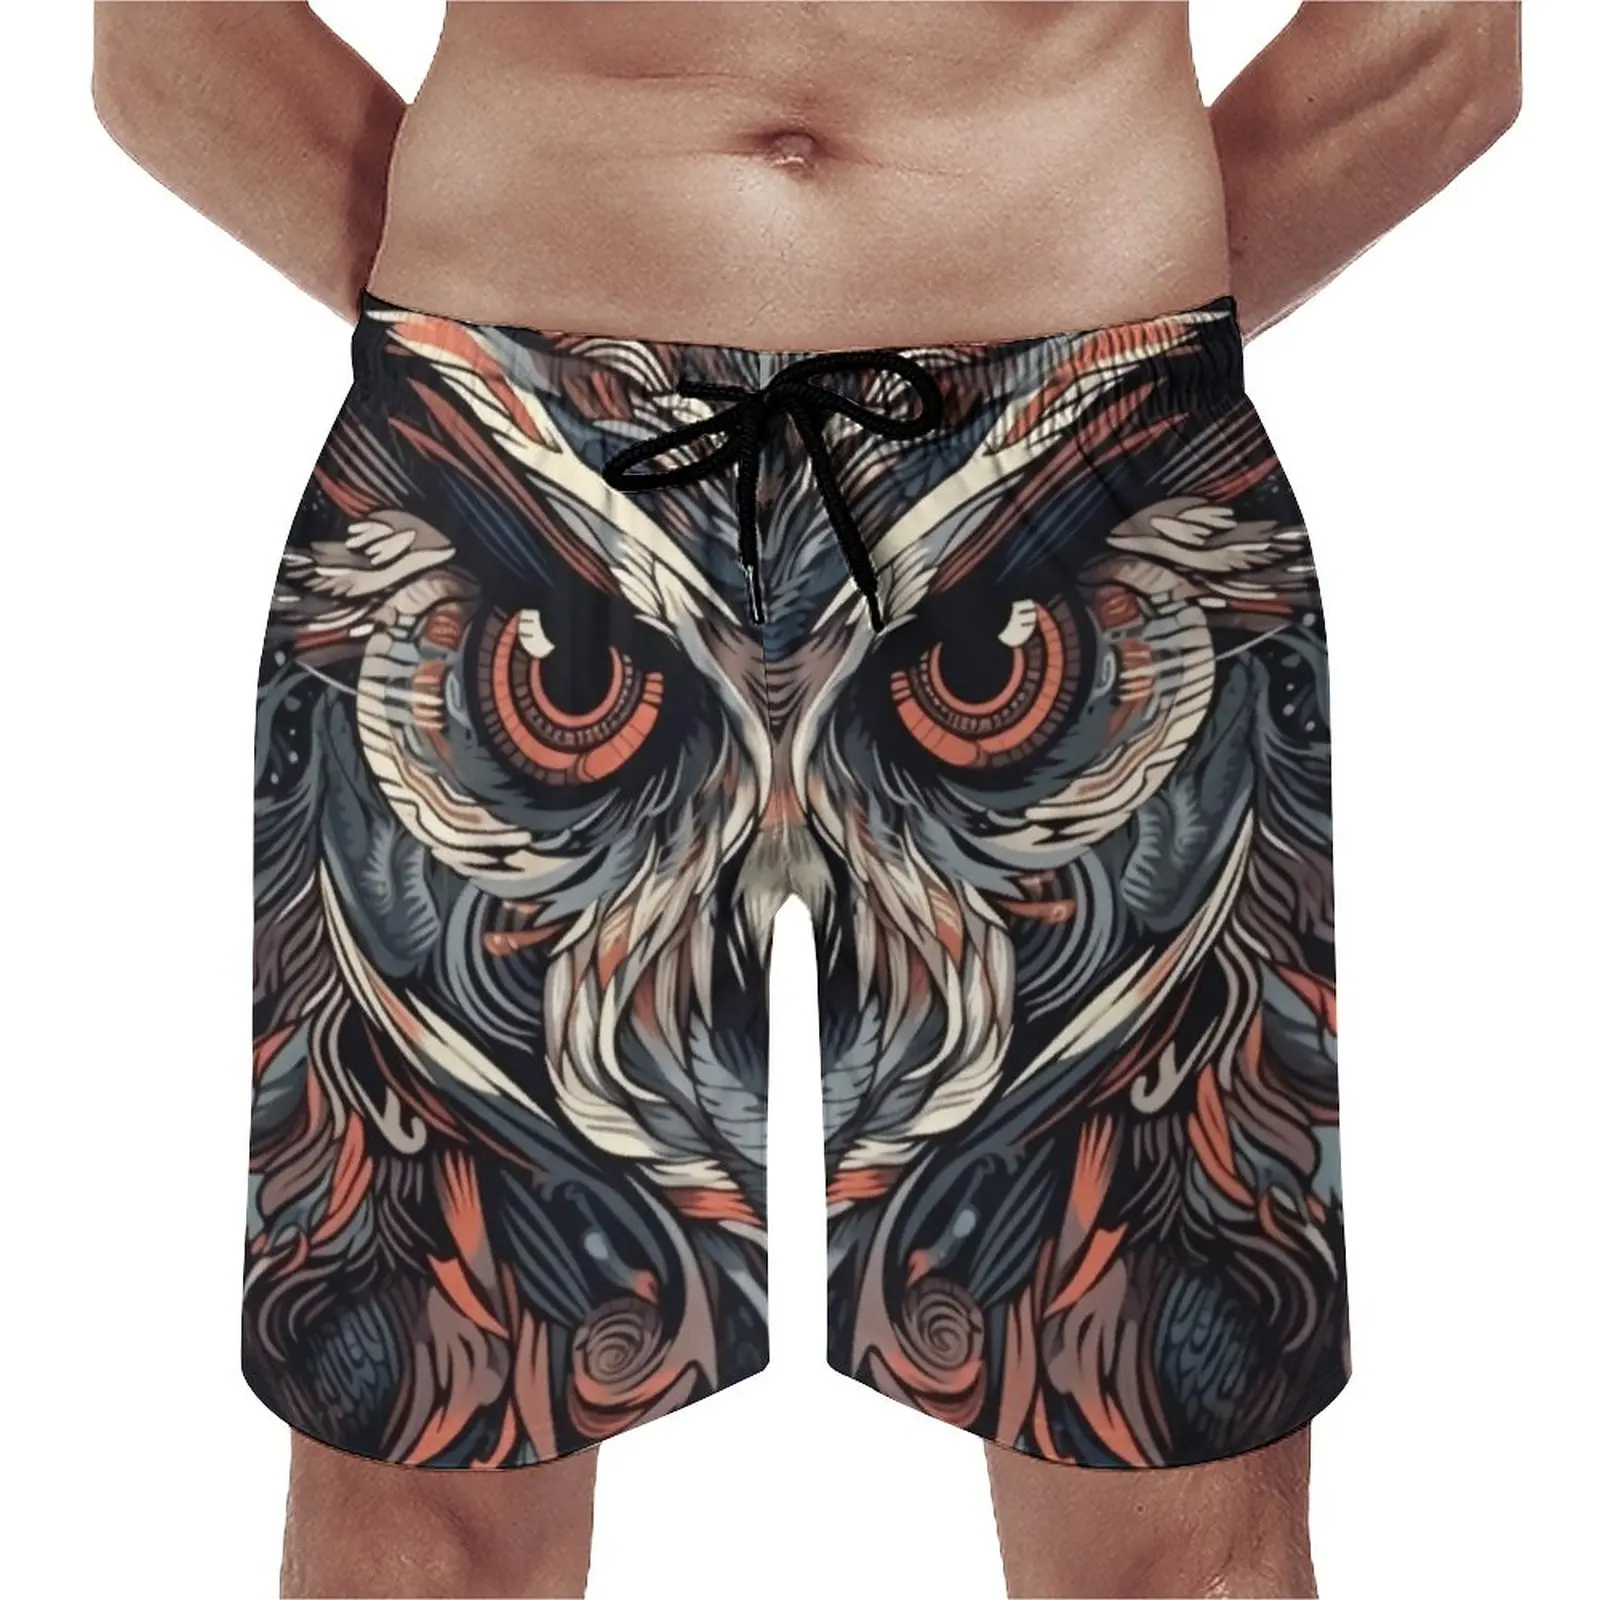 

Owl Gym Shorts Summer Psychedelic Lines Portraits Running Beach Short Pants Men Quick Drying Hawaii Custom Plus Size Swim Trunks